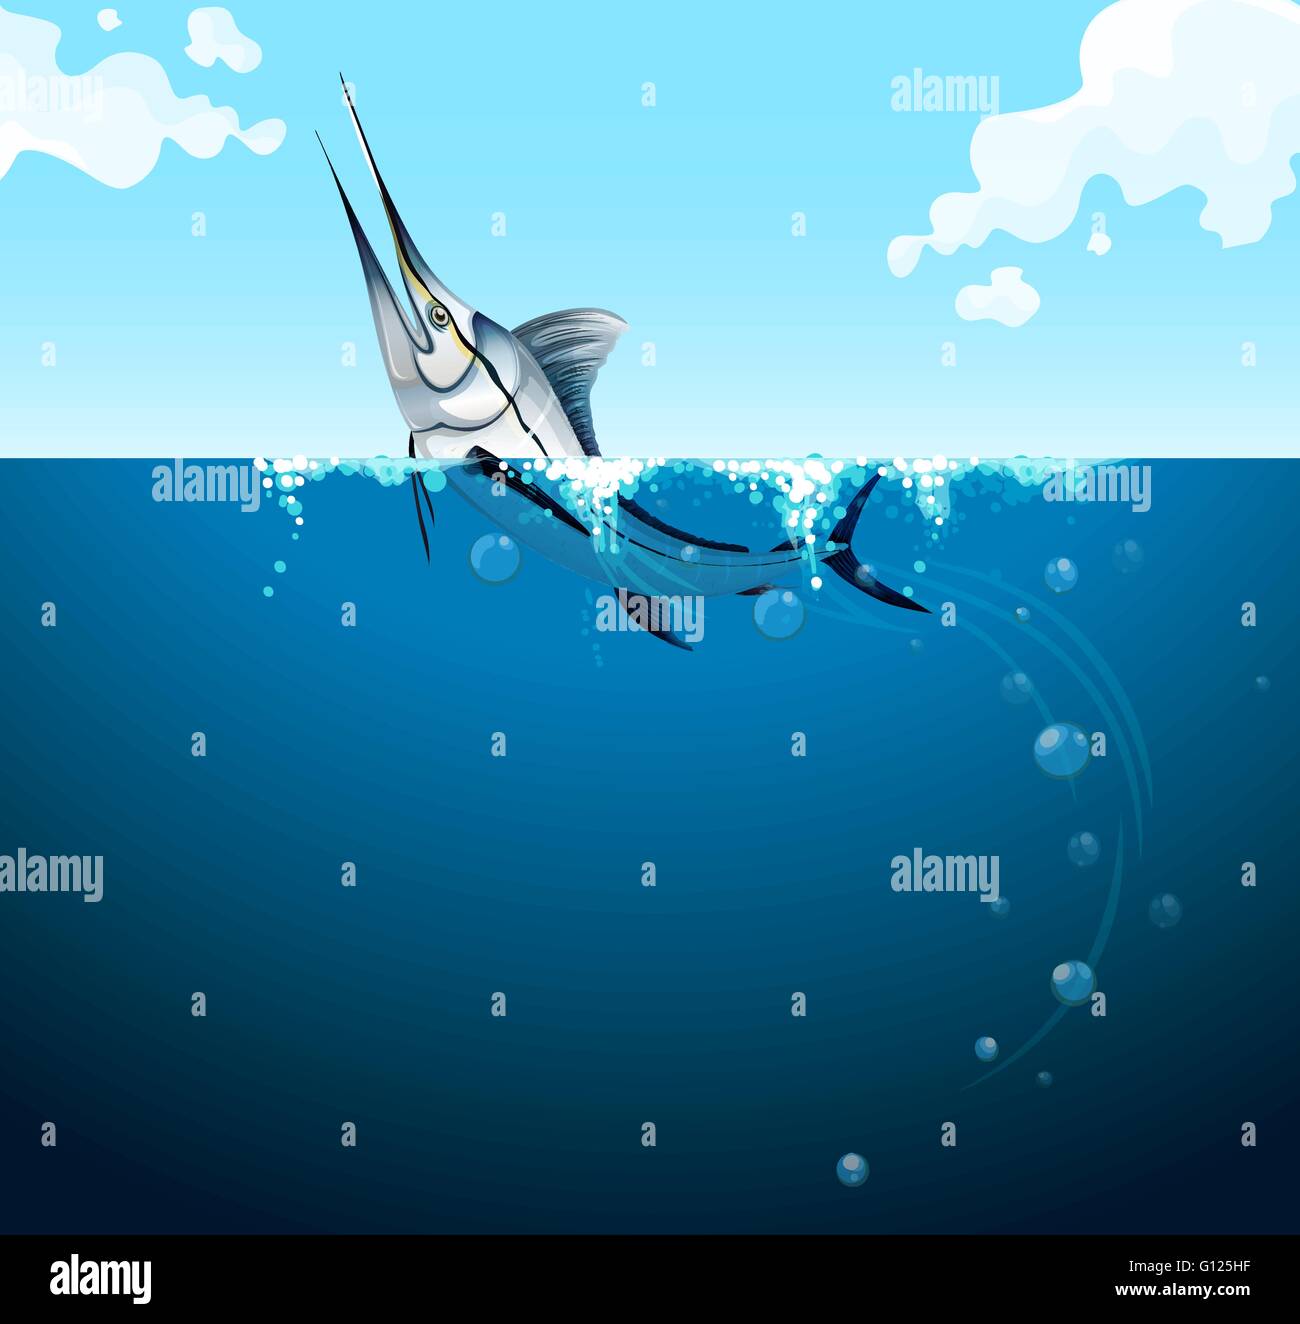 Swordfish swimming in the ocean illustration Stock Vector